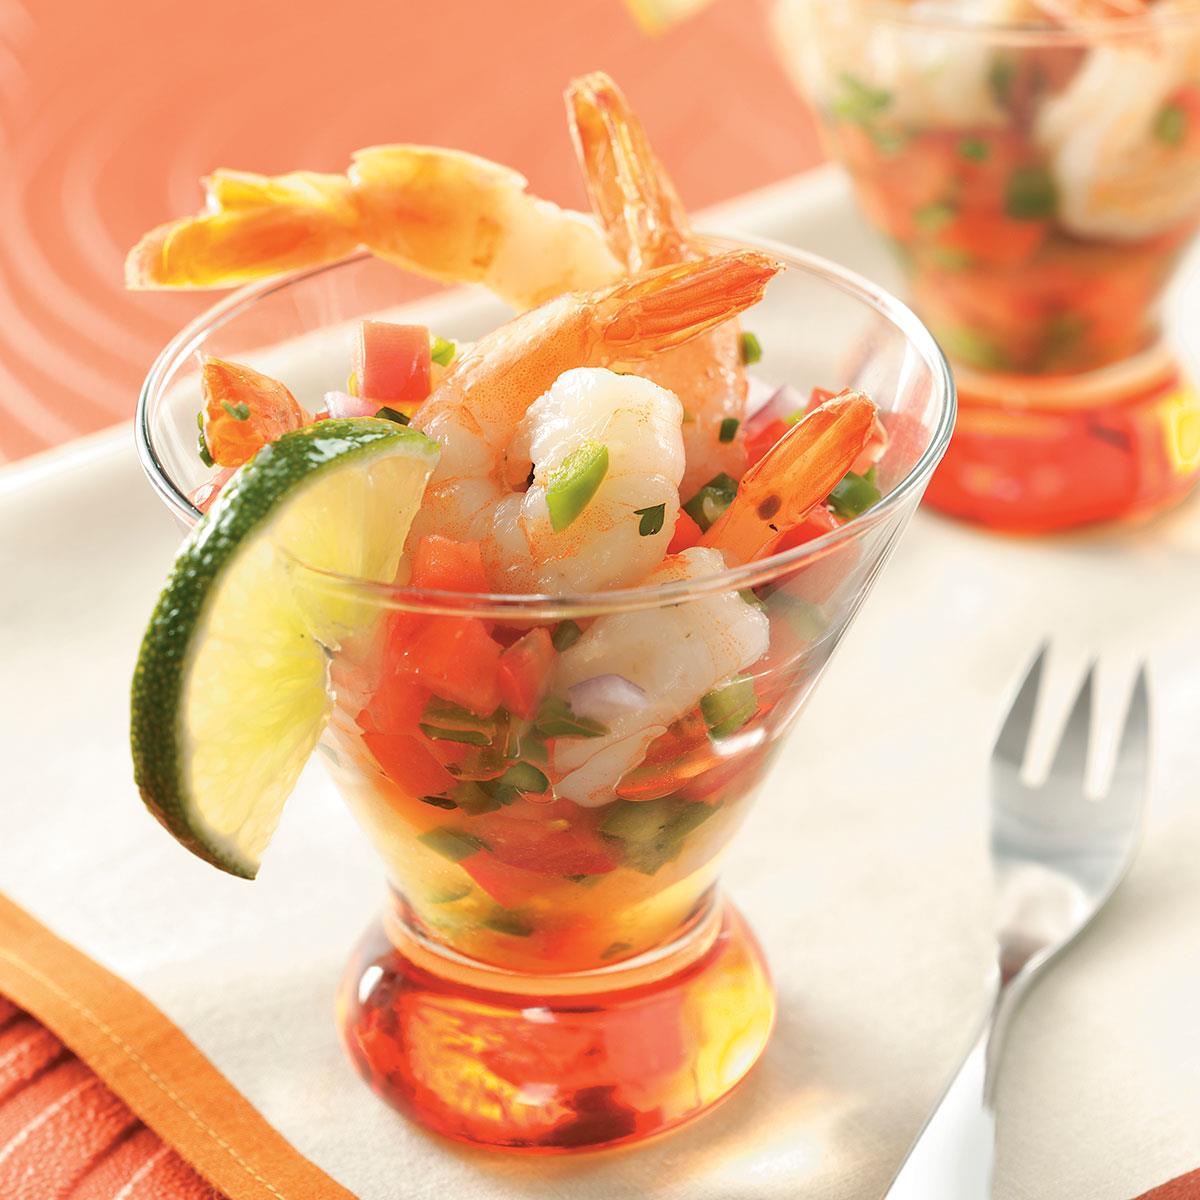 shrimp cocktail appetizer recipes